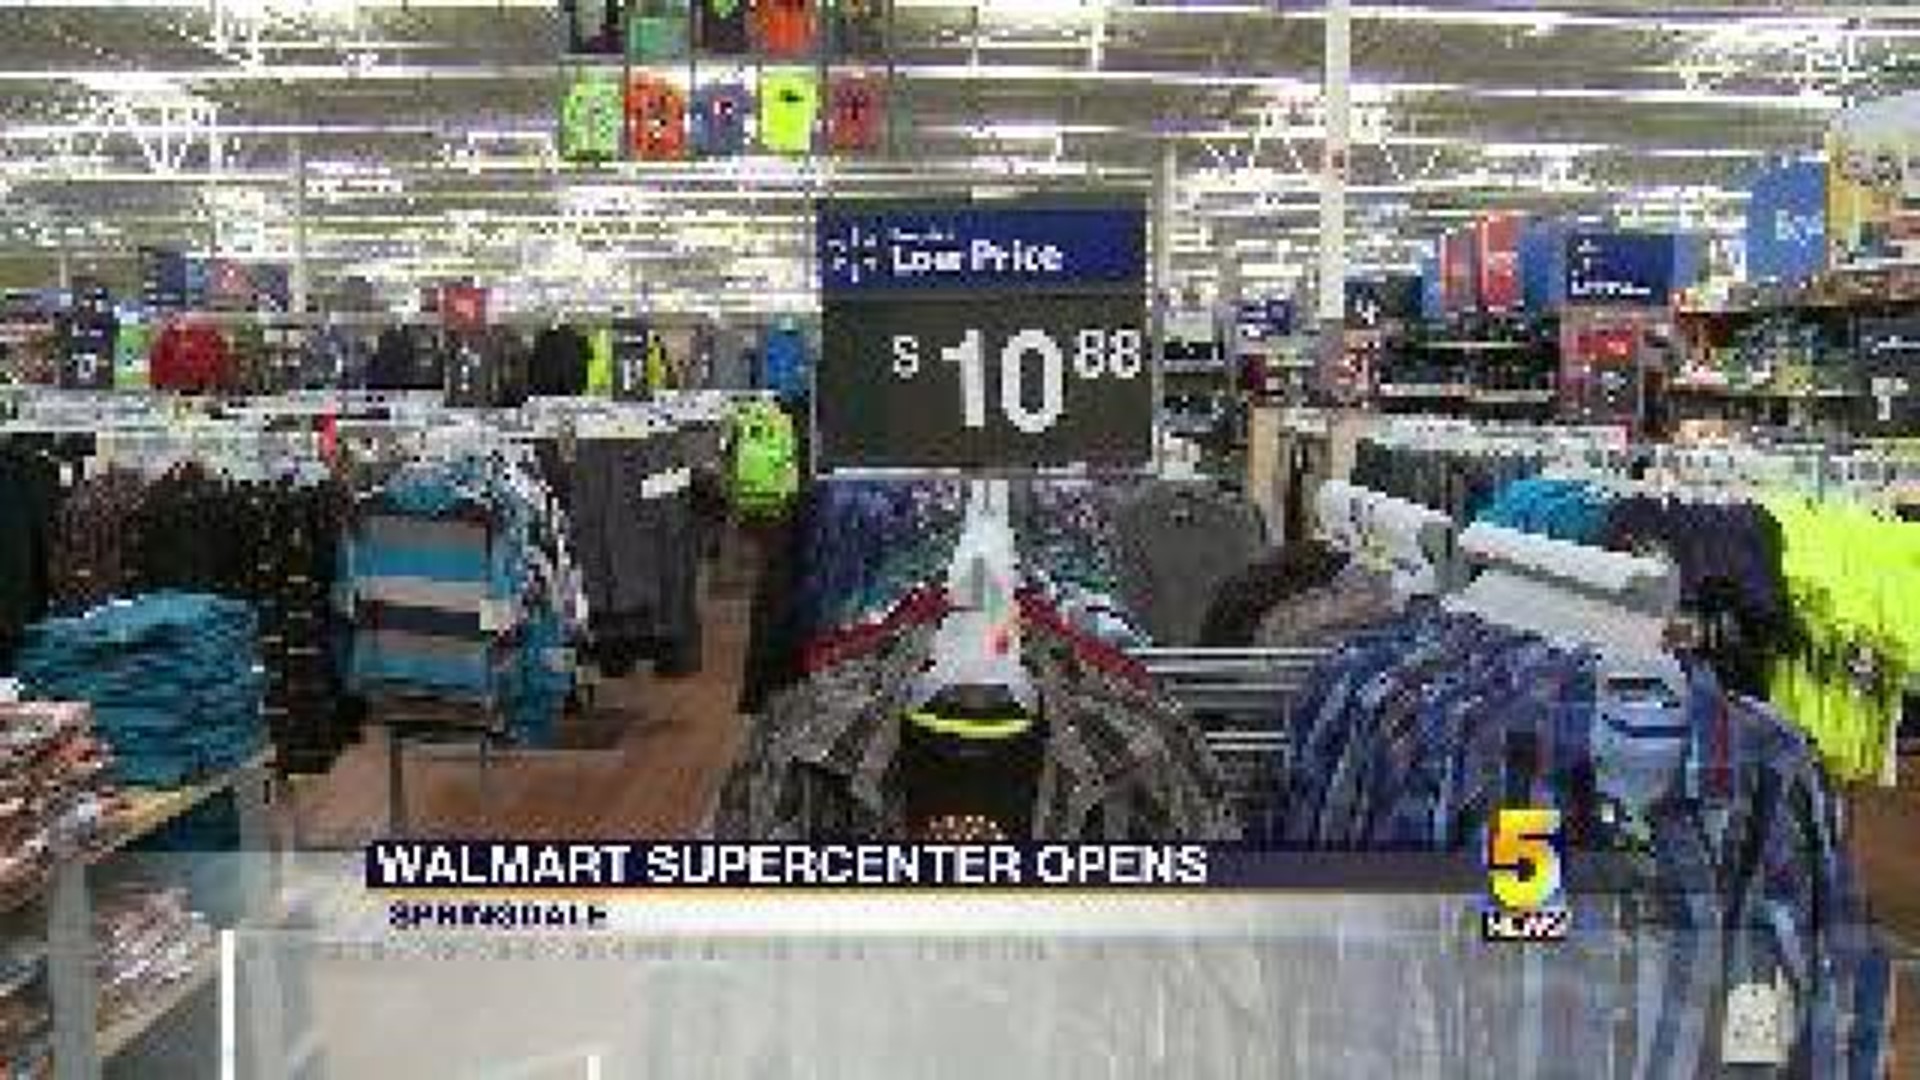 Walmart Supercenter Opens In Springdale